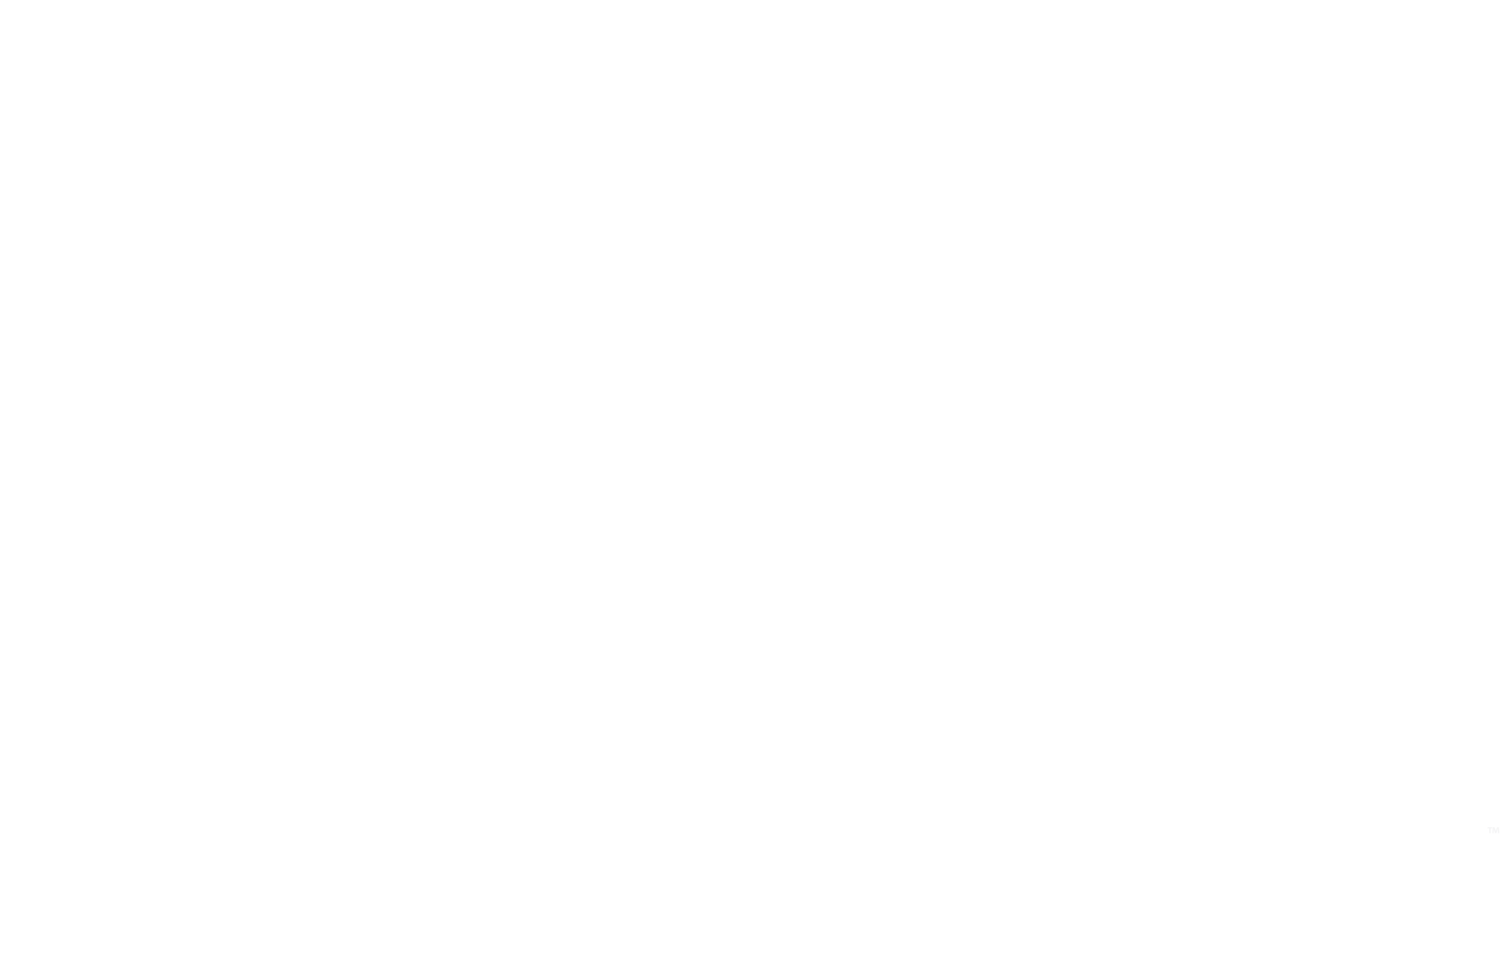 Flo Gardens